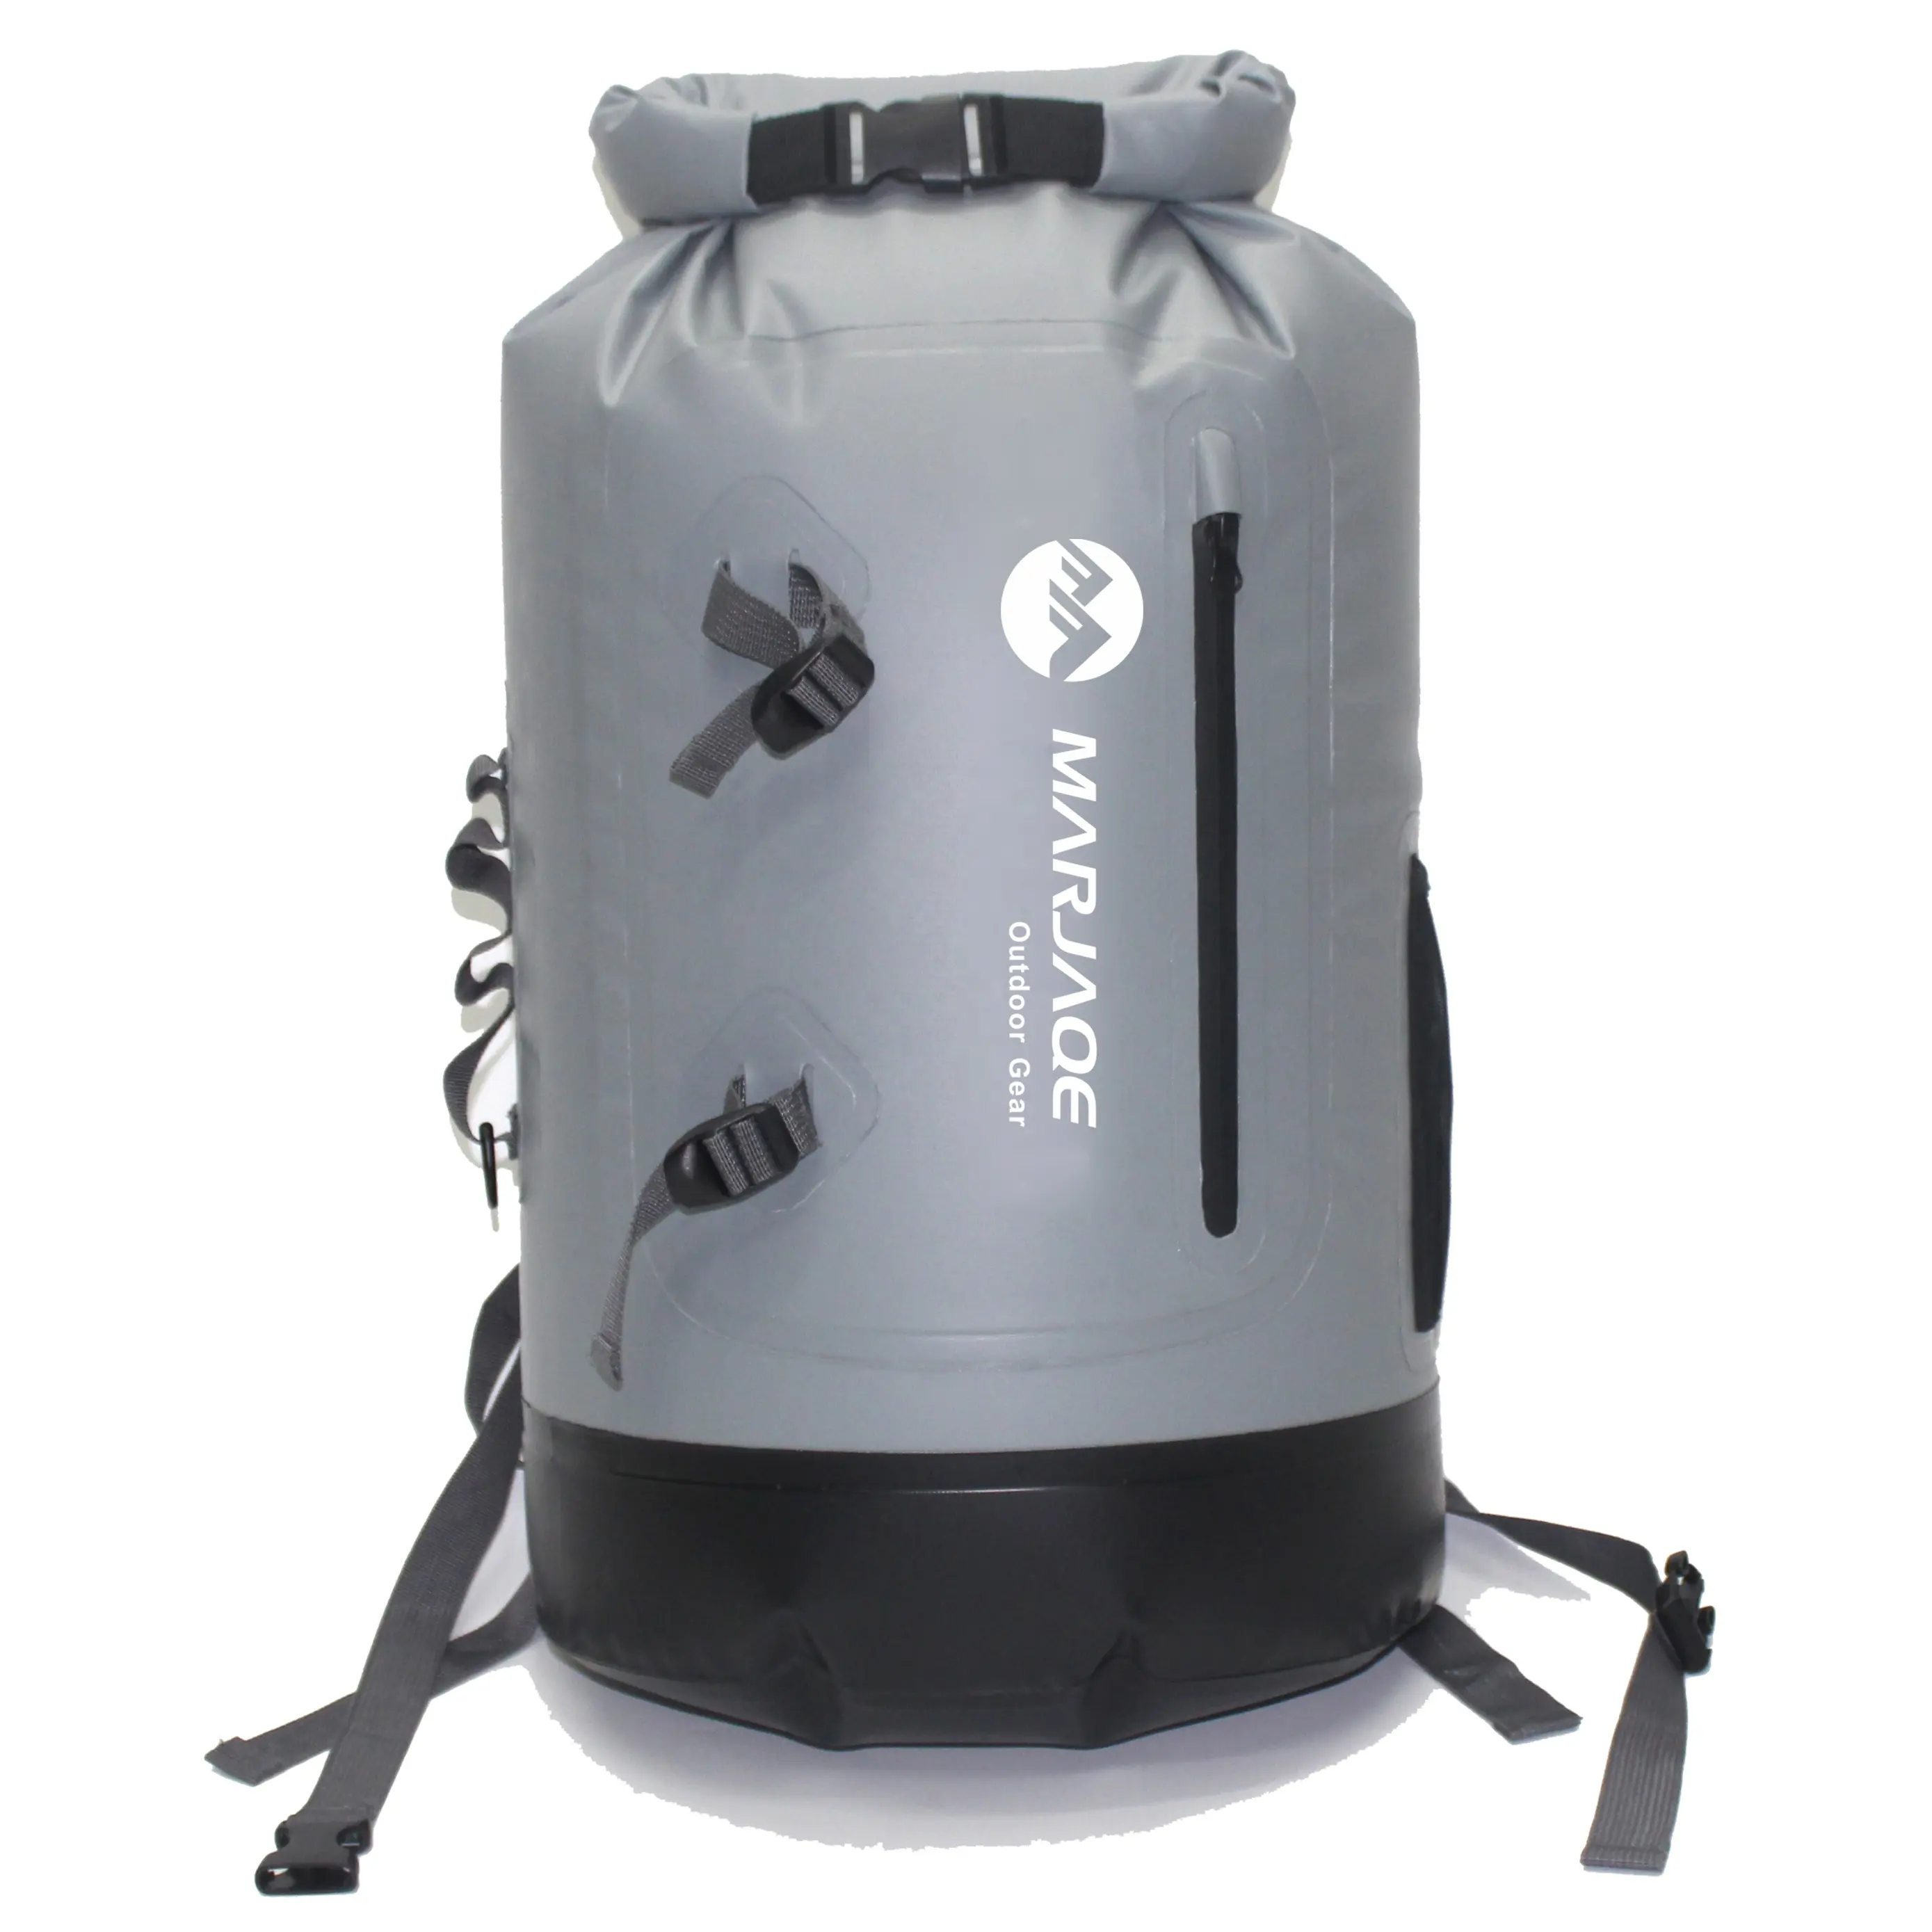 गर्म बिक्री टिकाऊ 500 डी तिरपाल जलरोधी पर्वतारोहण बैग सूखी pvc बैकपैक